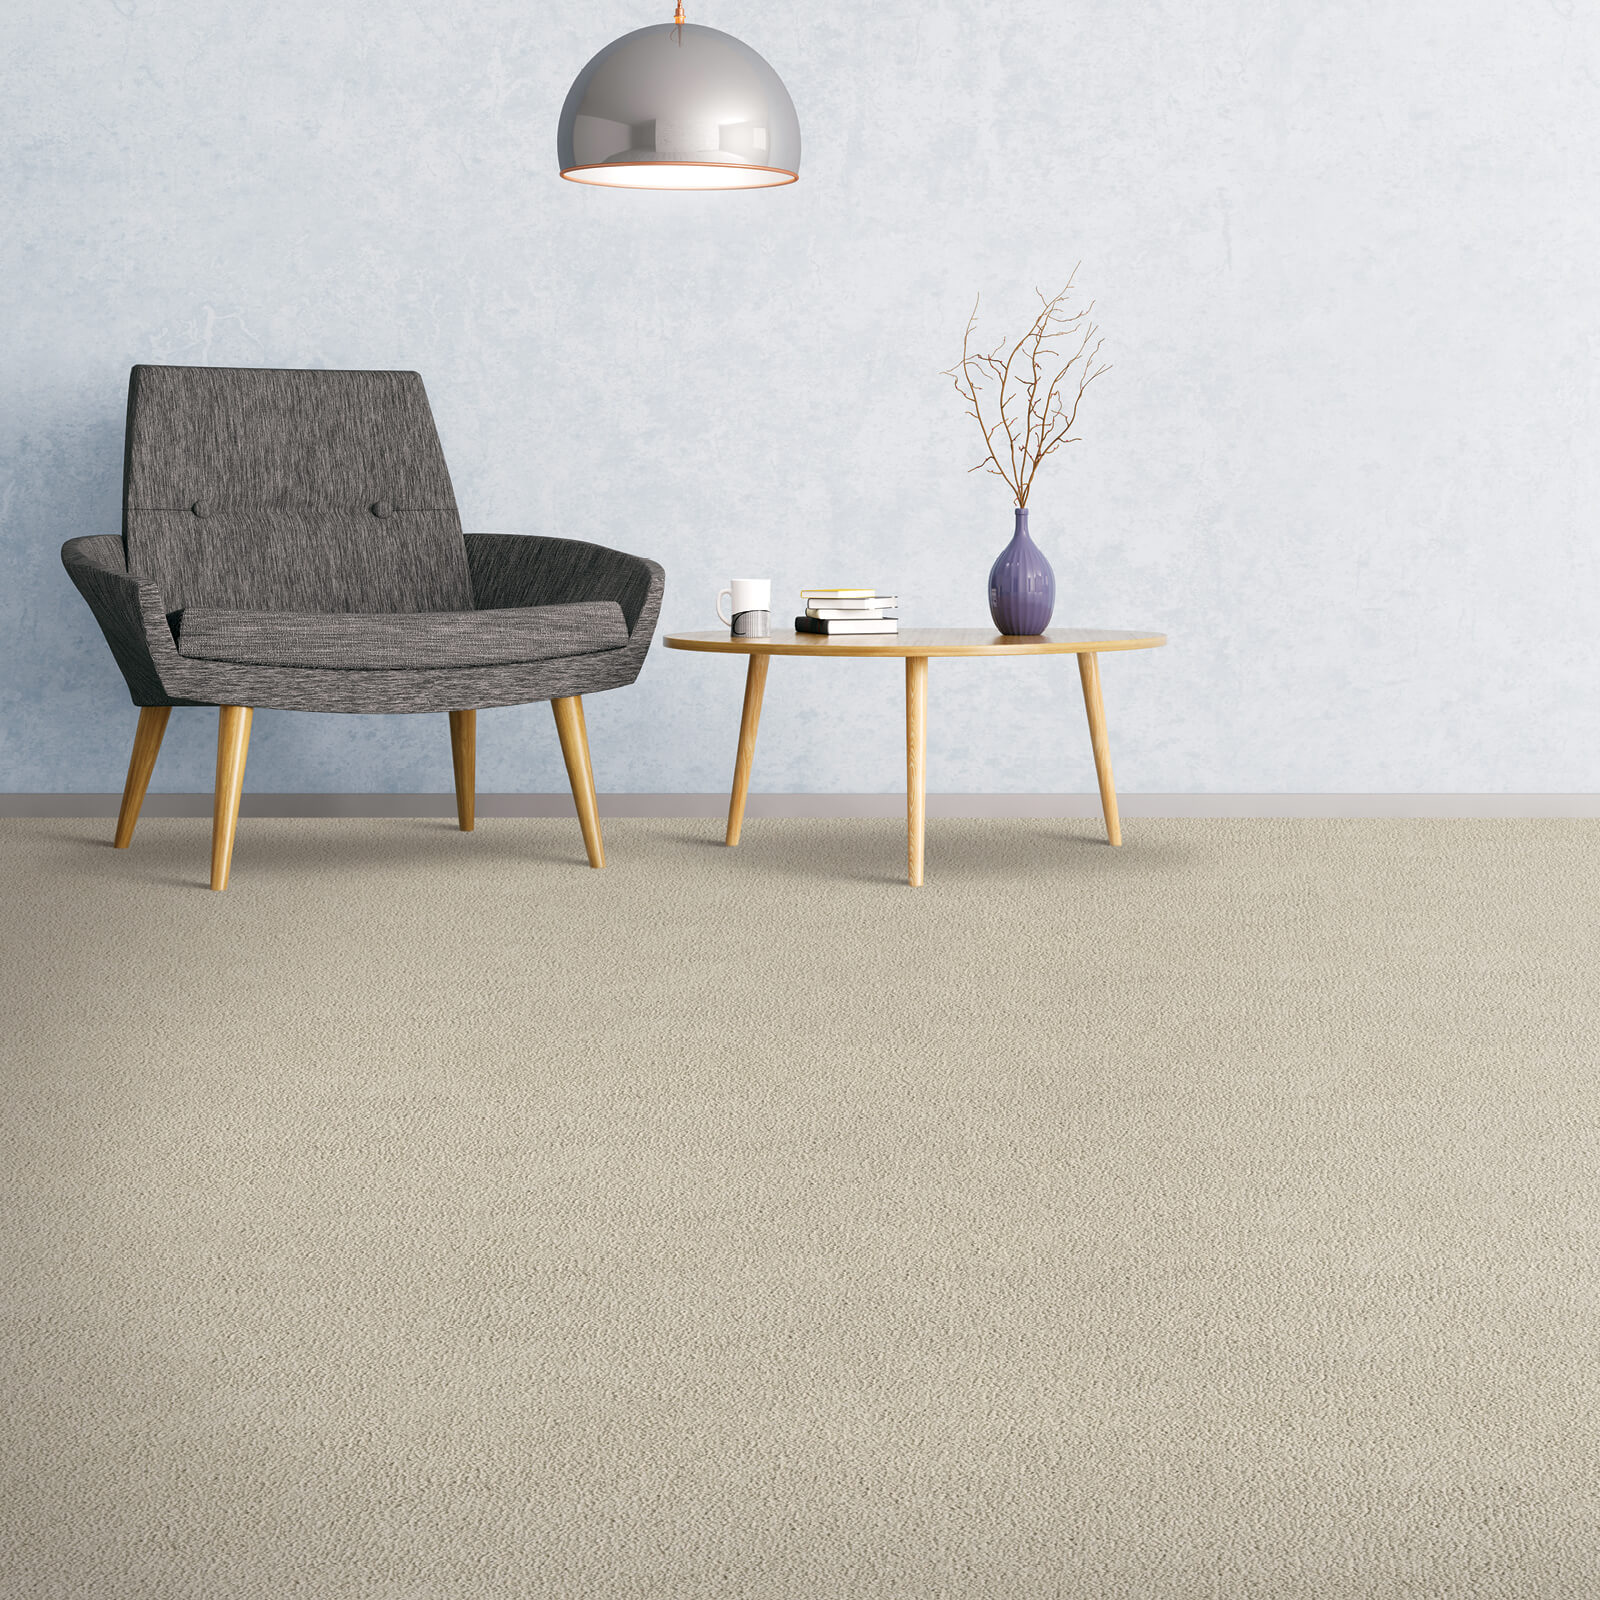 Carpet flooring | All Floors Design Centre